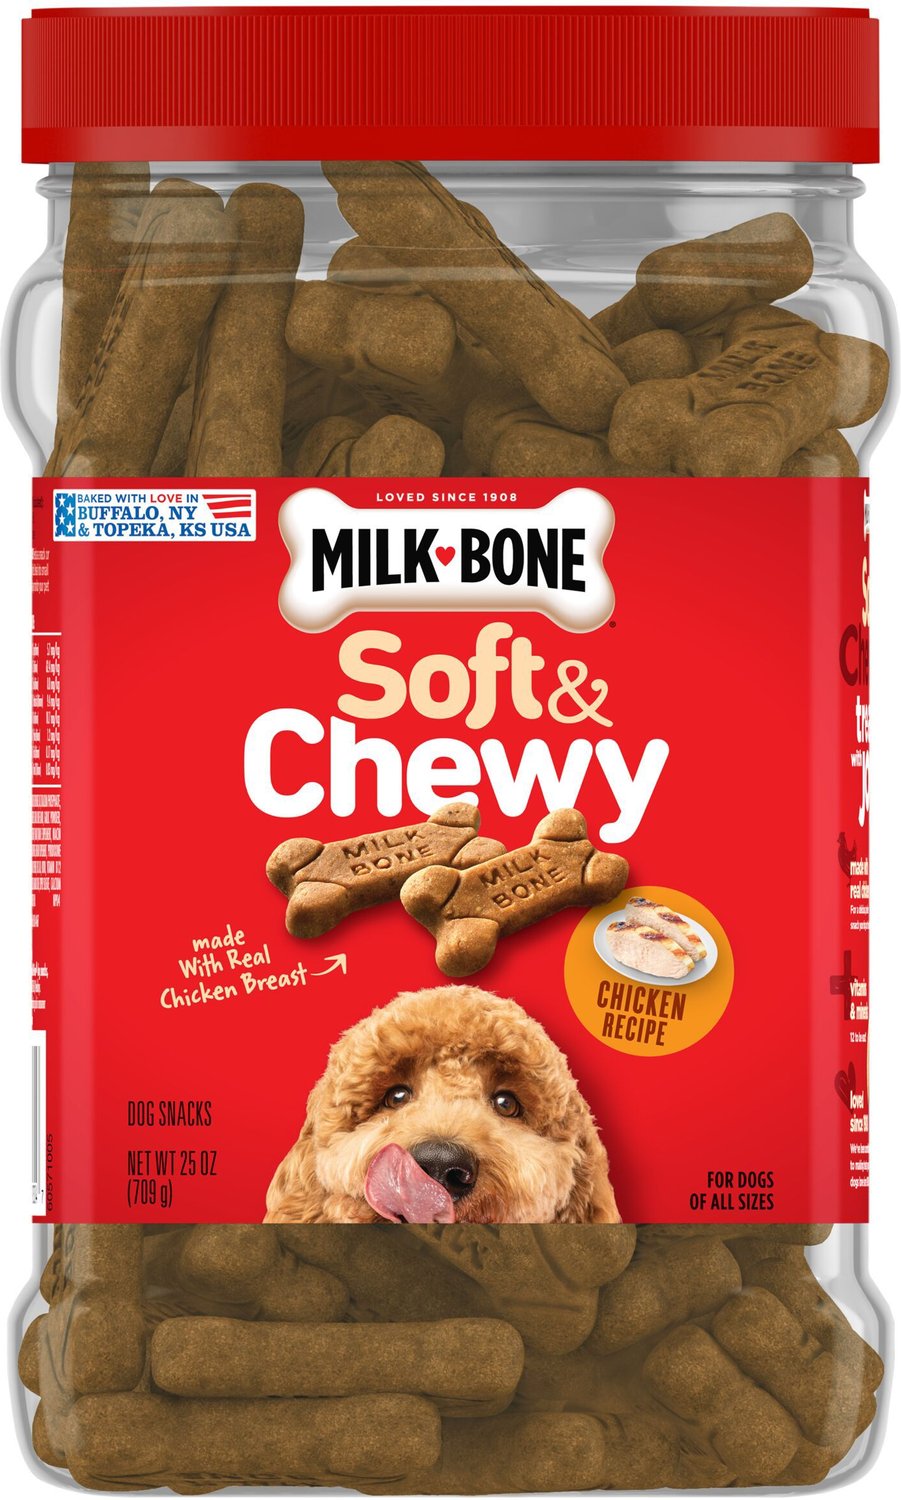 MILKBONE Soft & Chewy Chicken Recipe Dog Treats (Free Shipping) Chewy